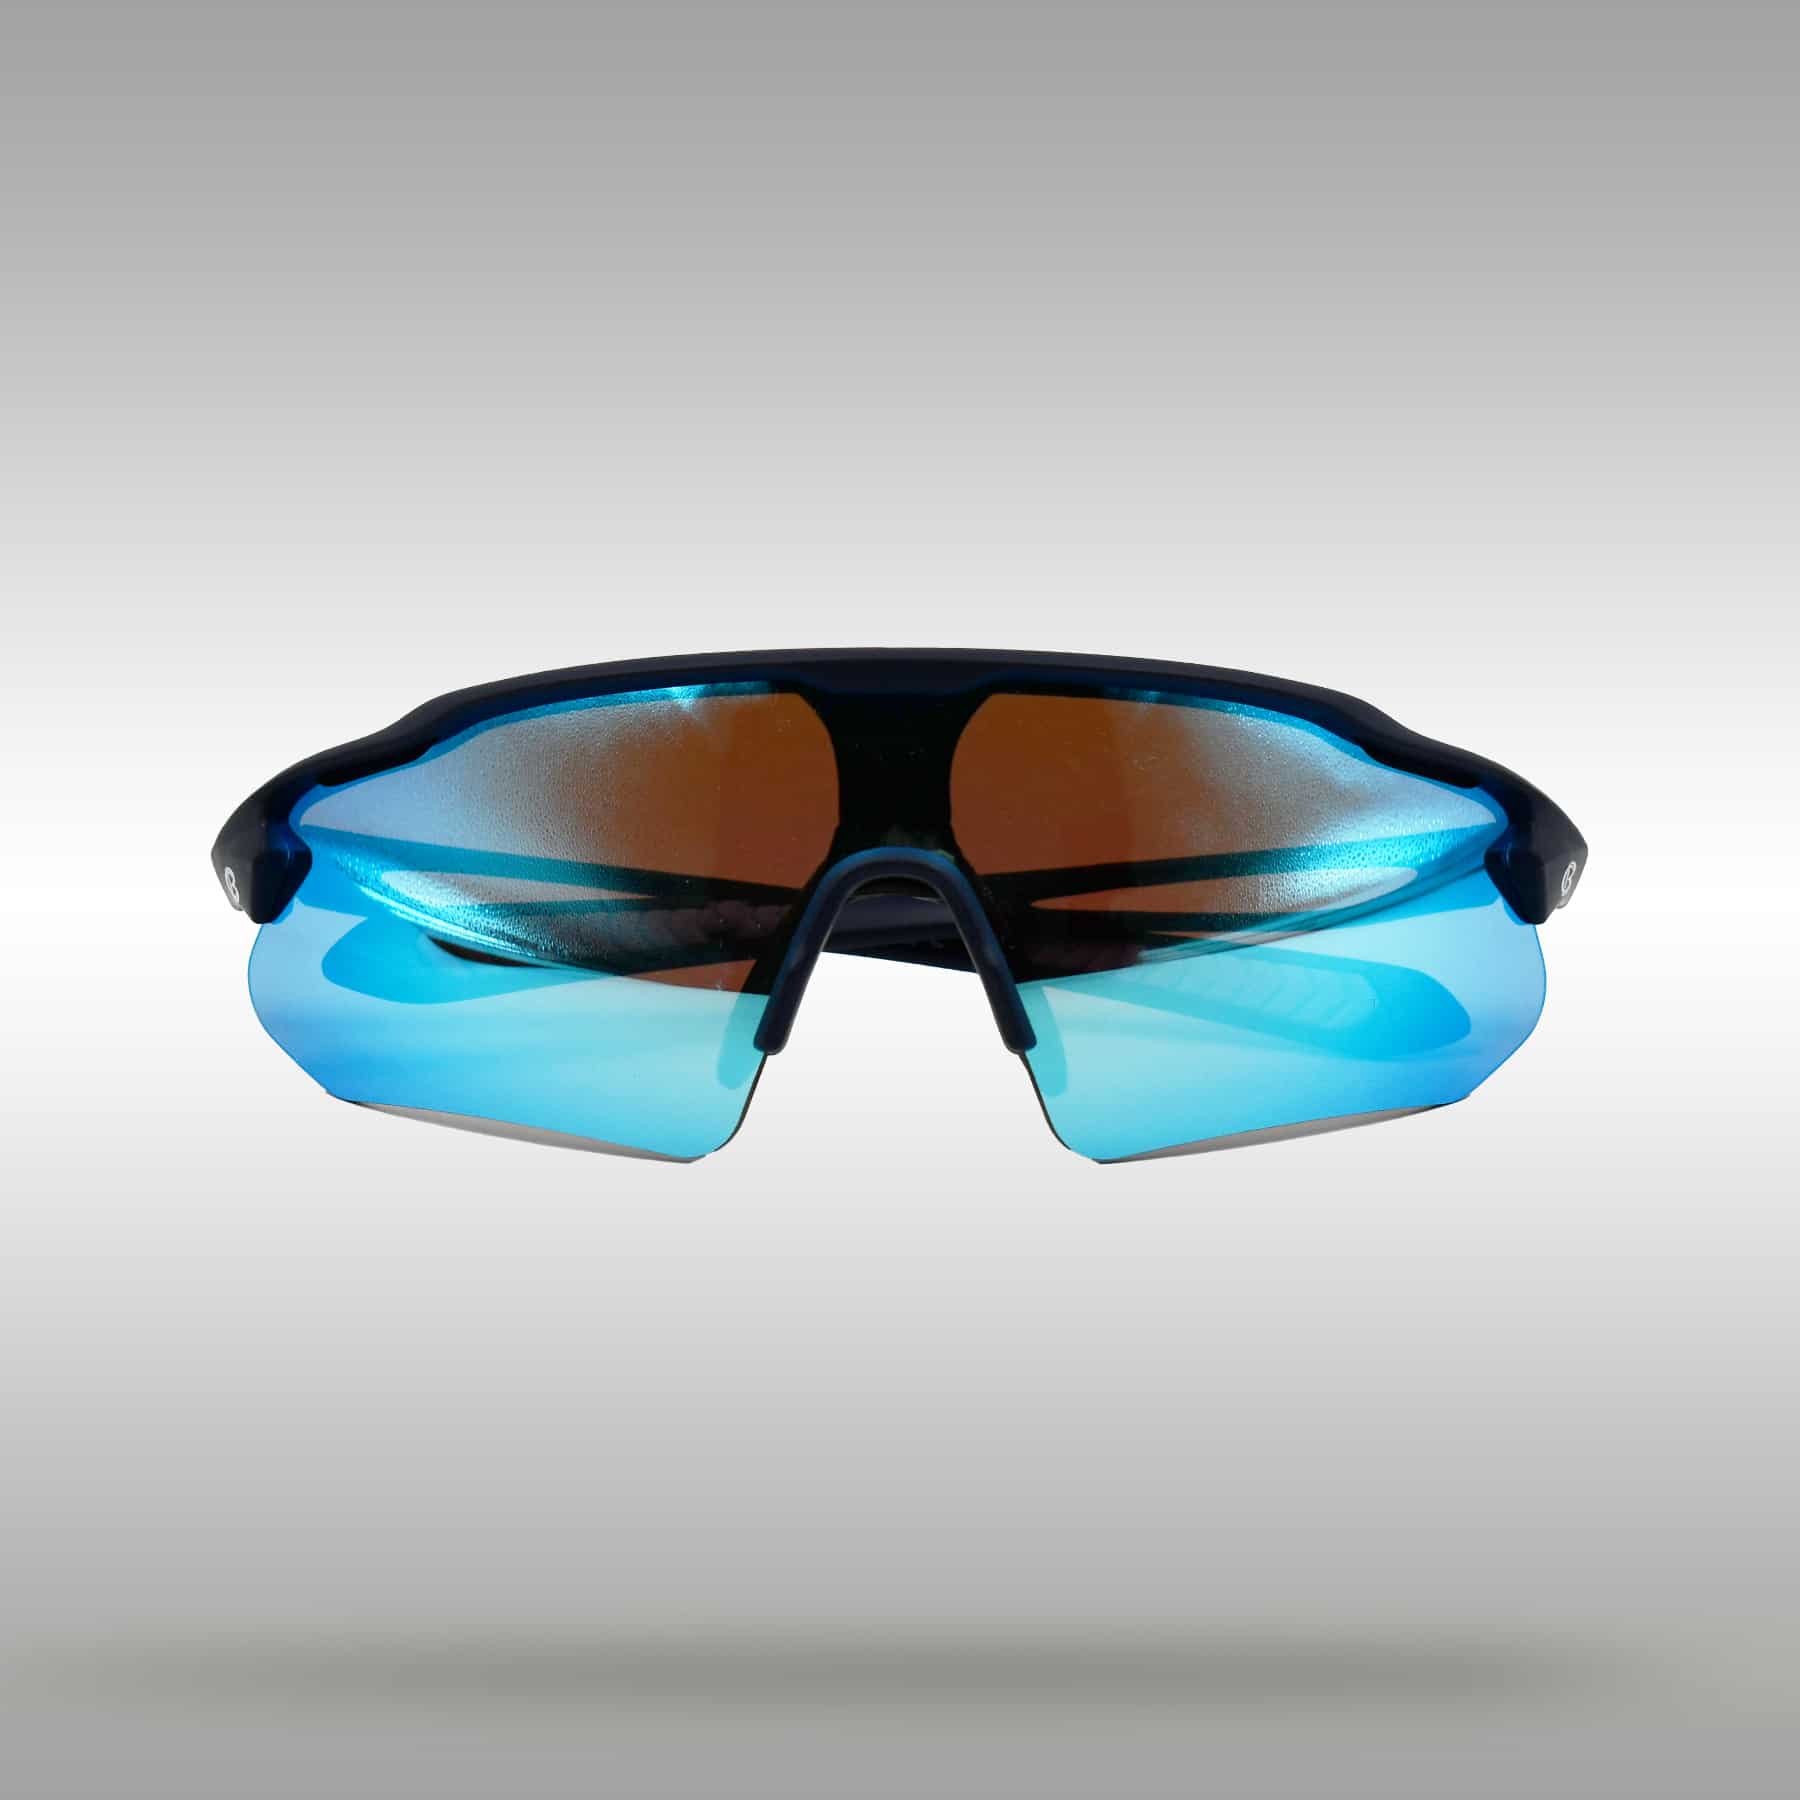 Cooperstown Bat Sport Sunglasses